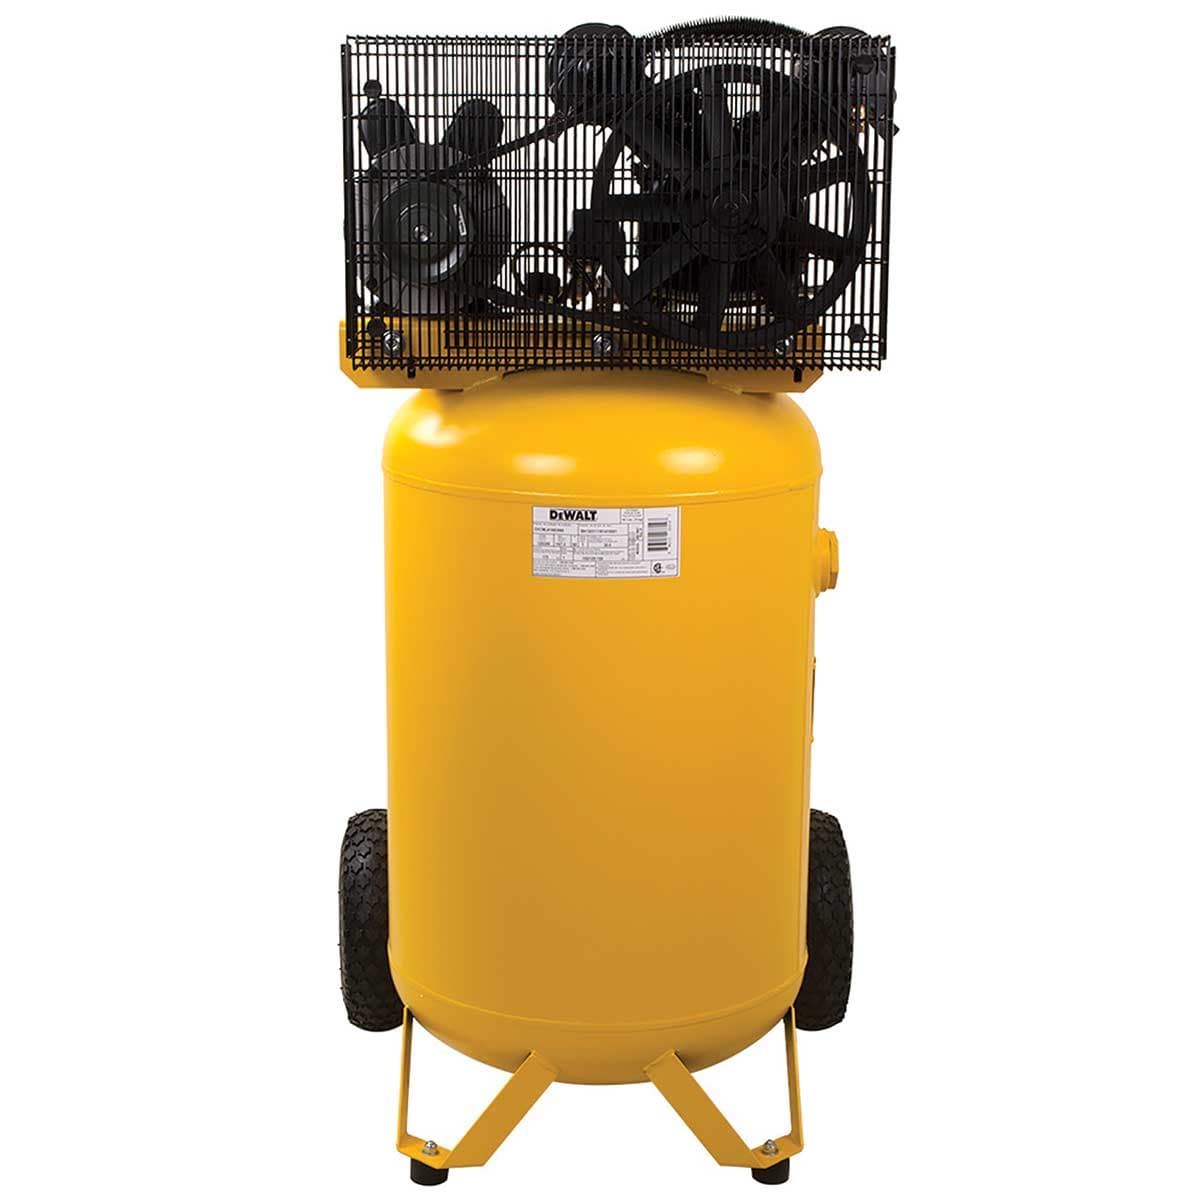 DEWALT Portable Electric Air Compressor - 1.6 HP, 30 gal.